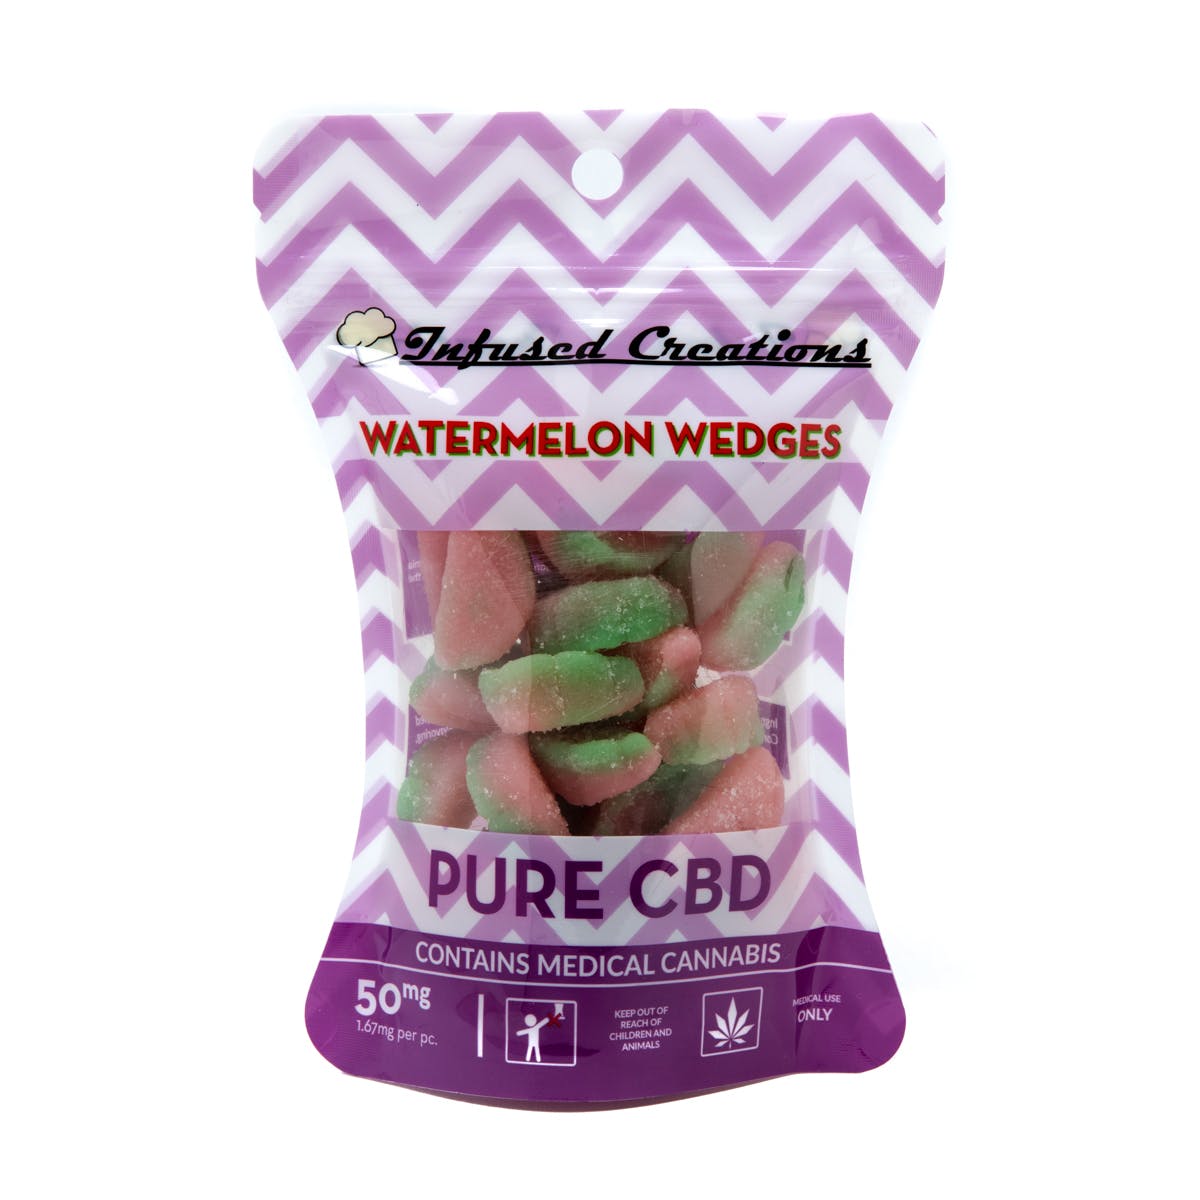 Watermelon Wedges Pure CBD, 50mg